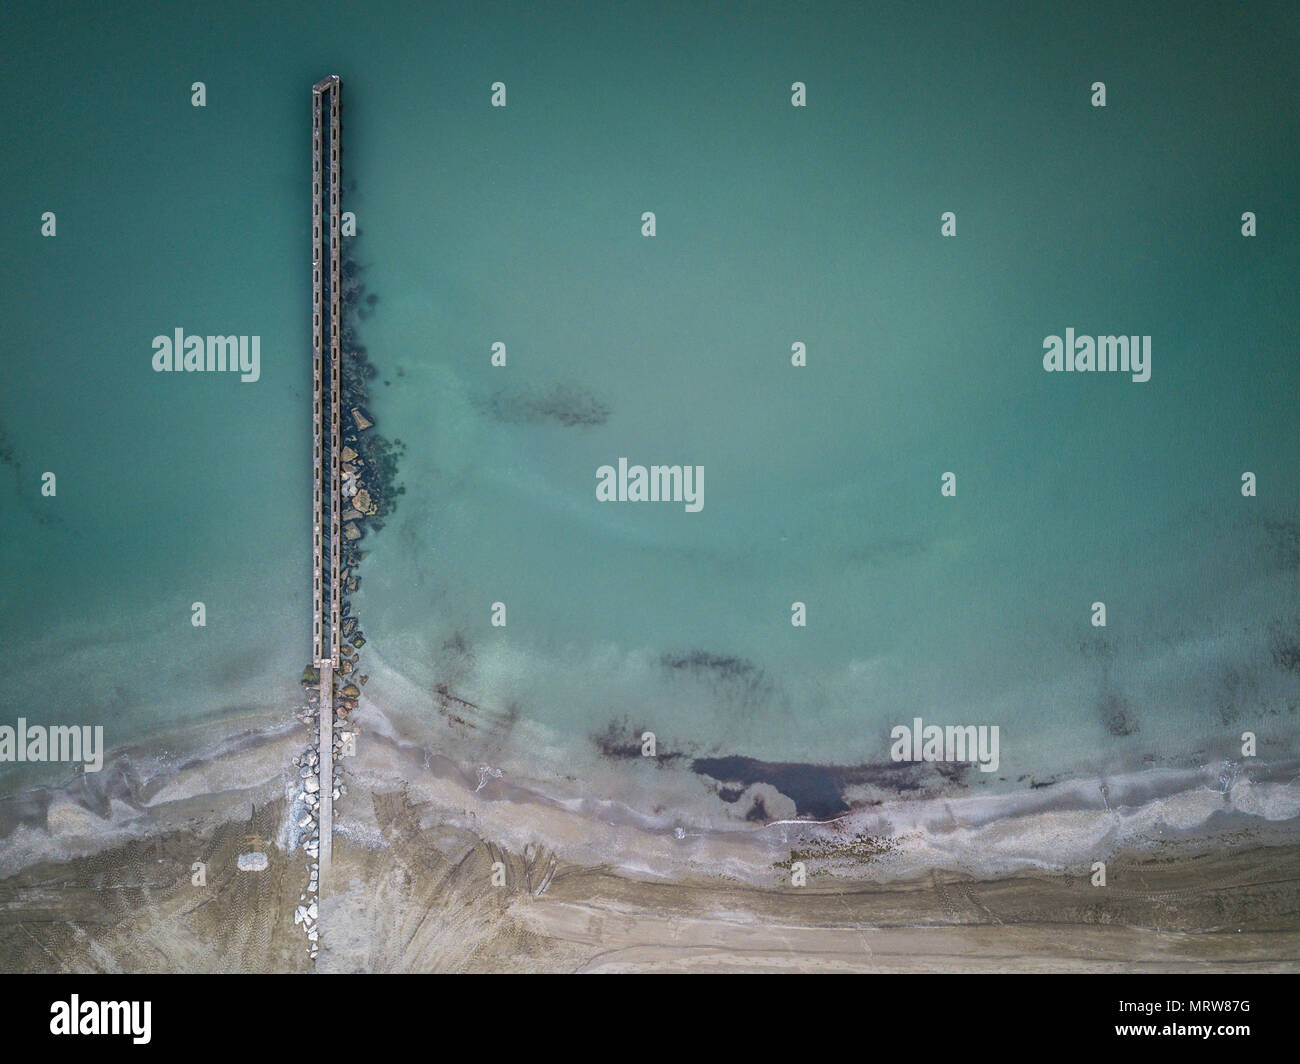 Drone photography of sea shore Stock Photo